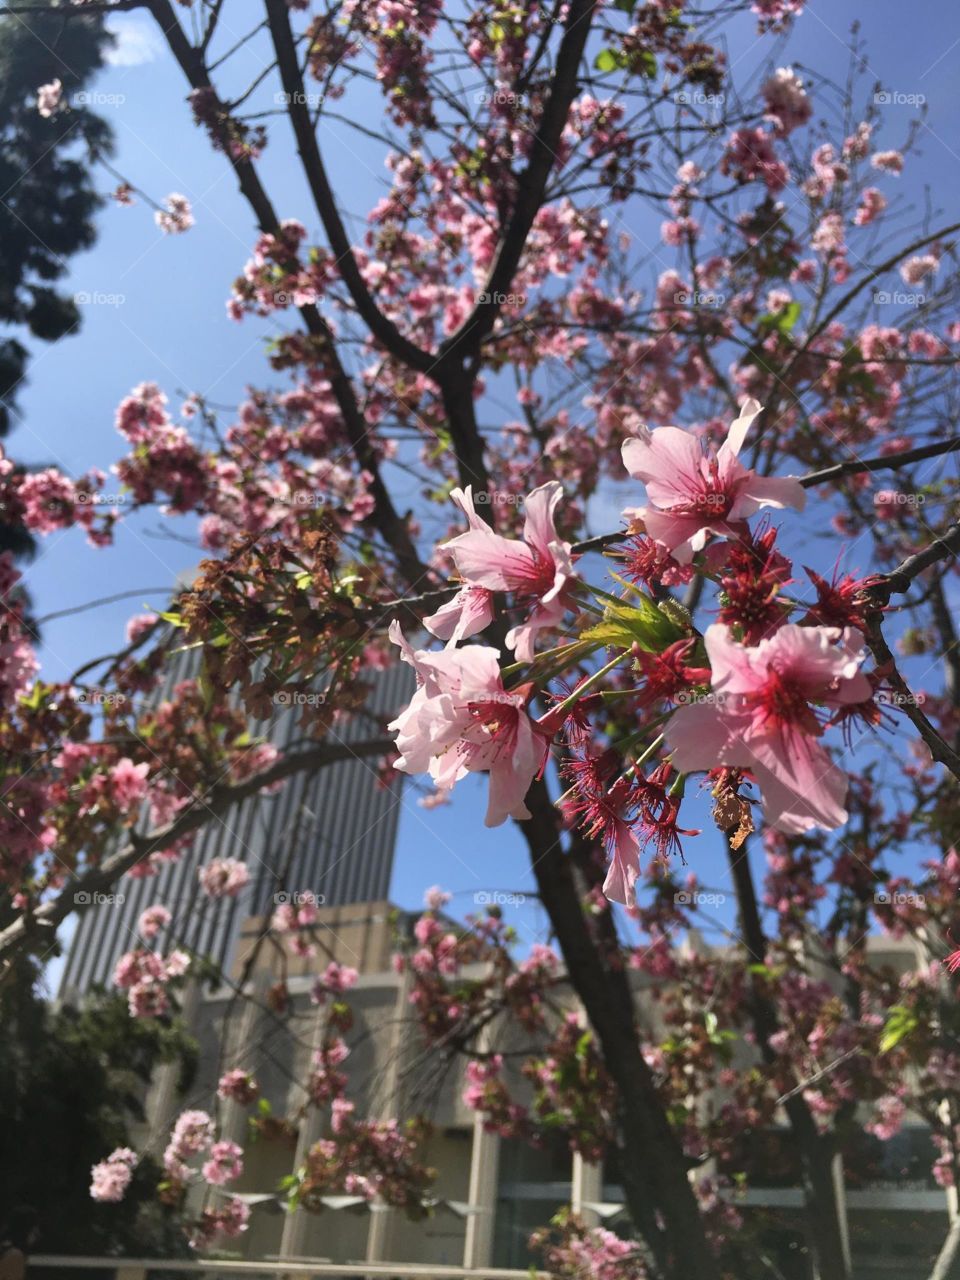 Springtime in the City